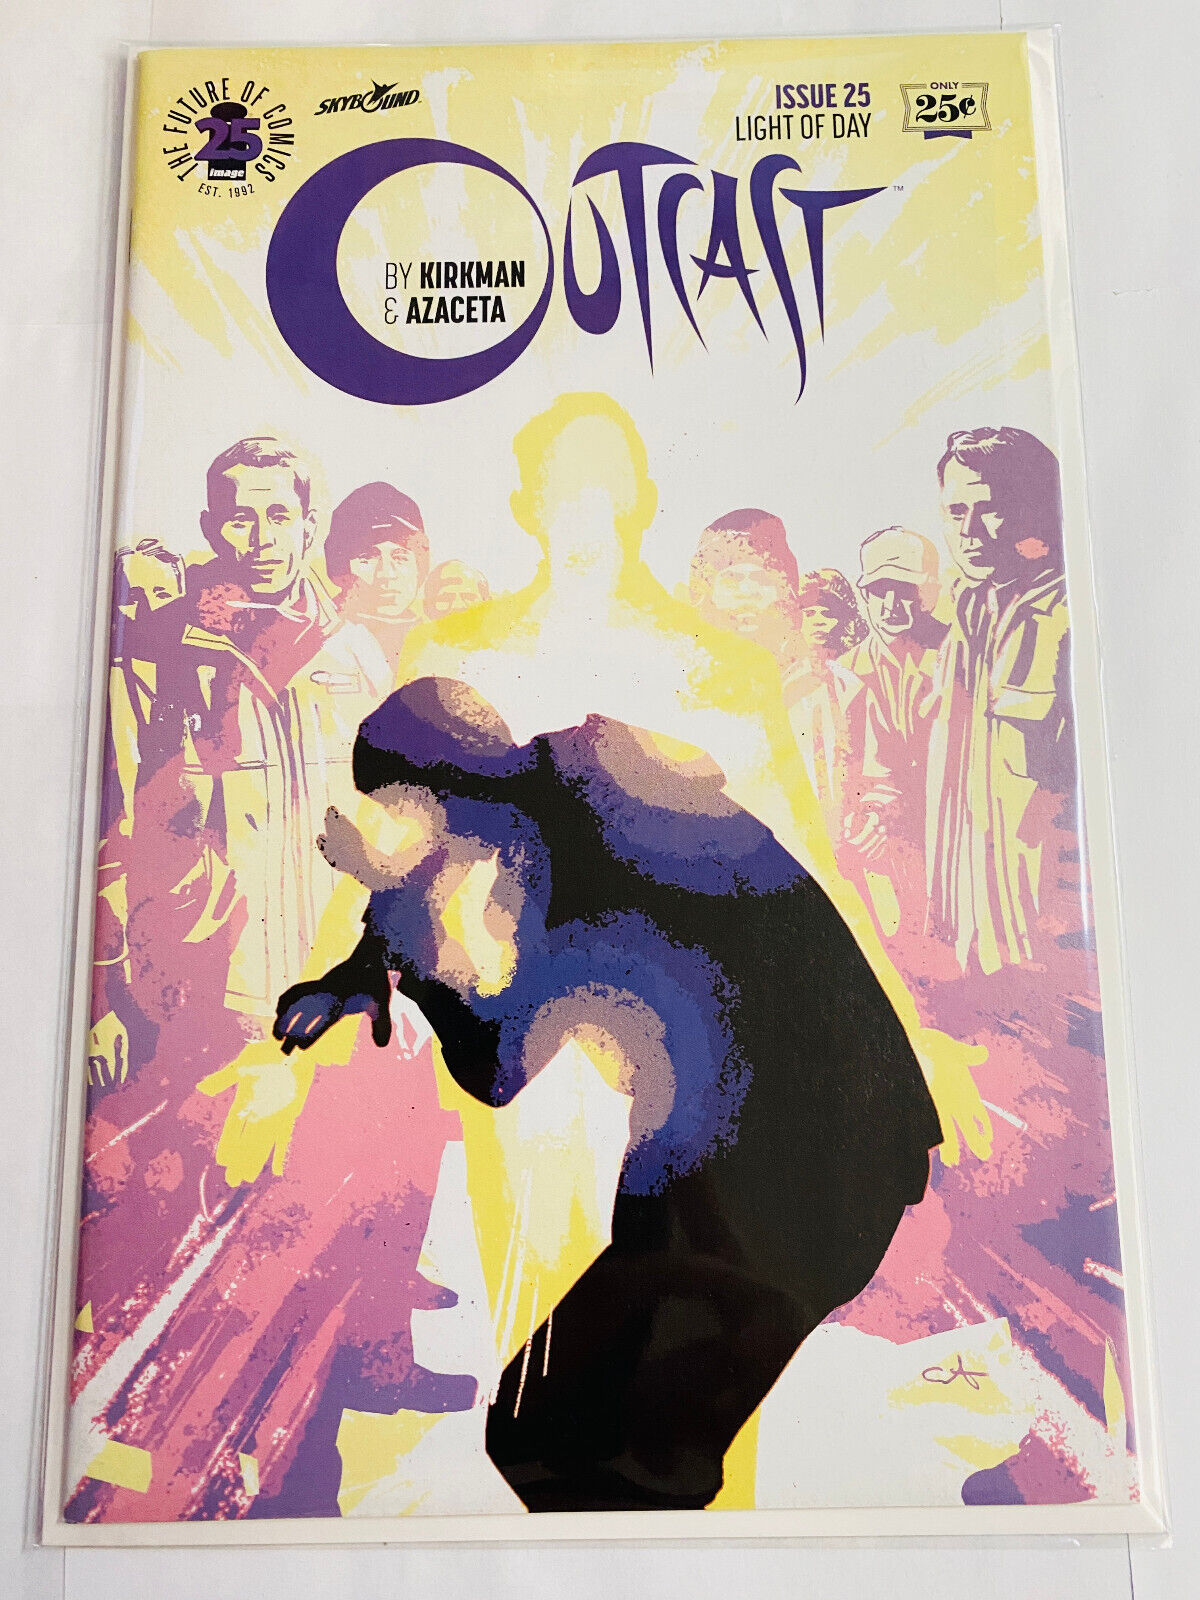 🔥SUPERCLEAN💎 - Outcast by Kirkman & Azaceta #25 (Image Comics, January 2015)